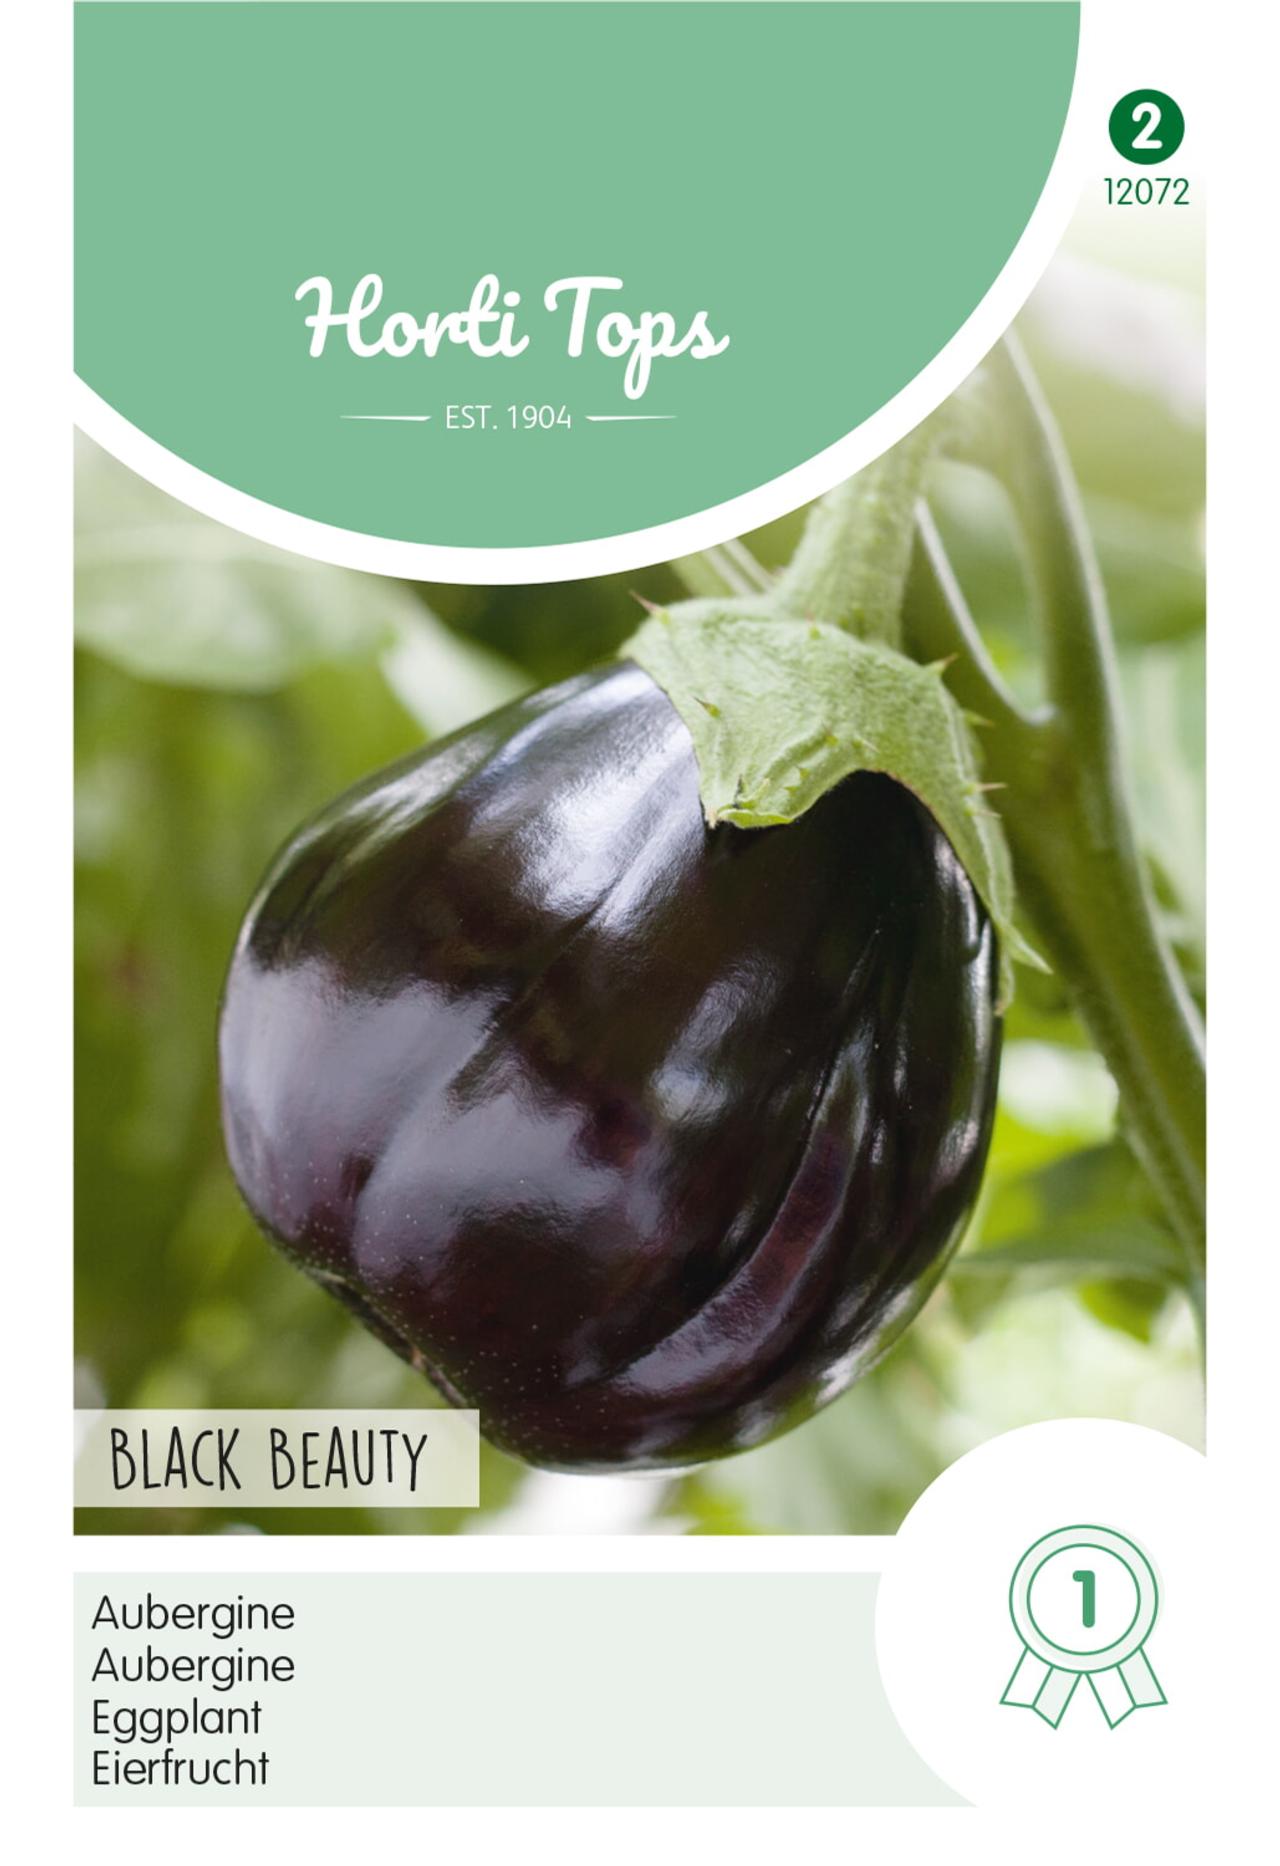 Solanum melongena 'Black Beauty' plant